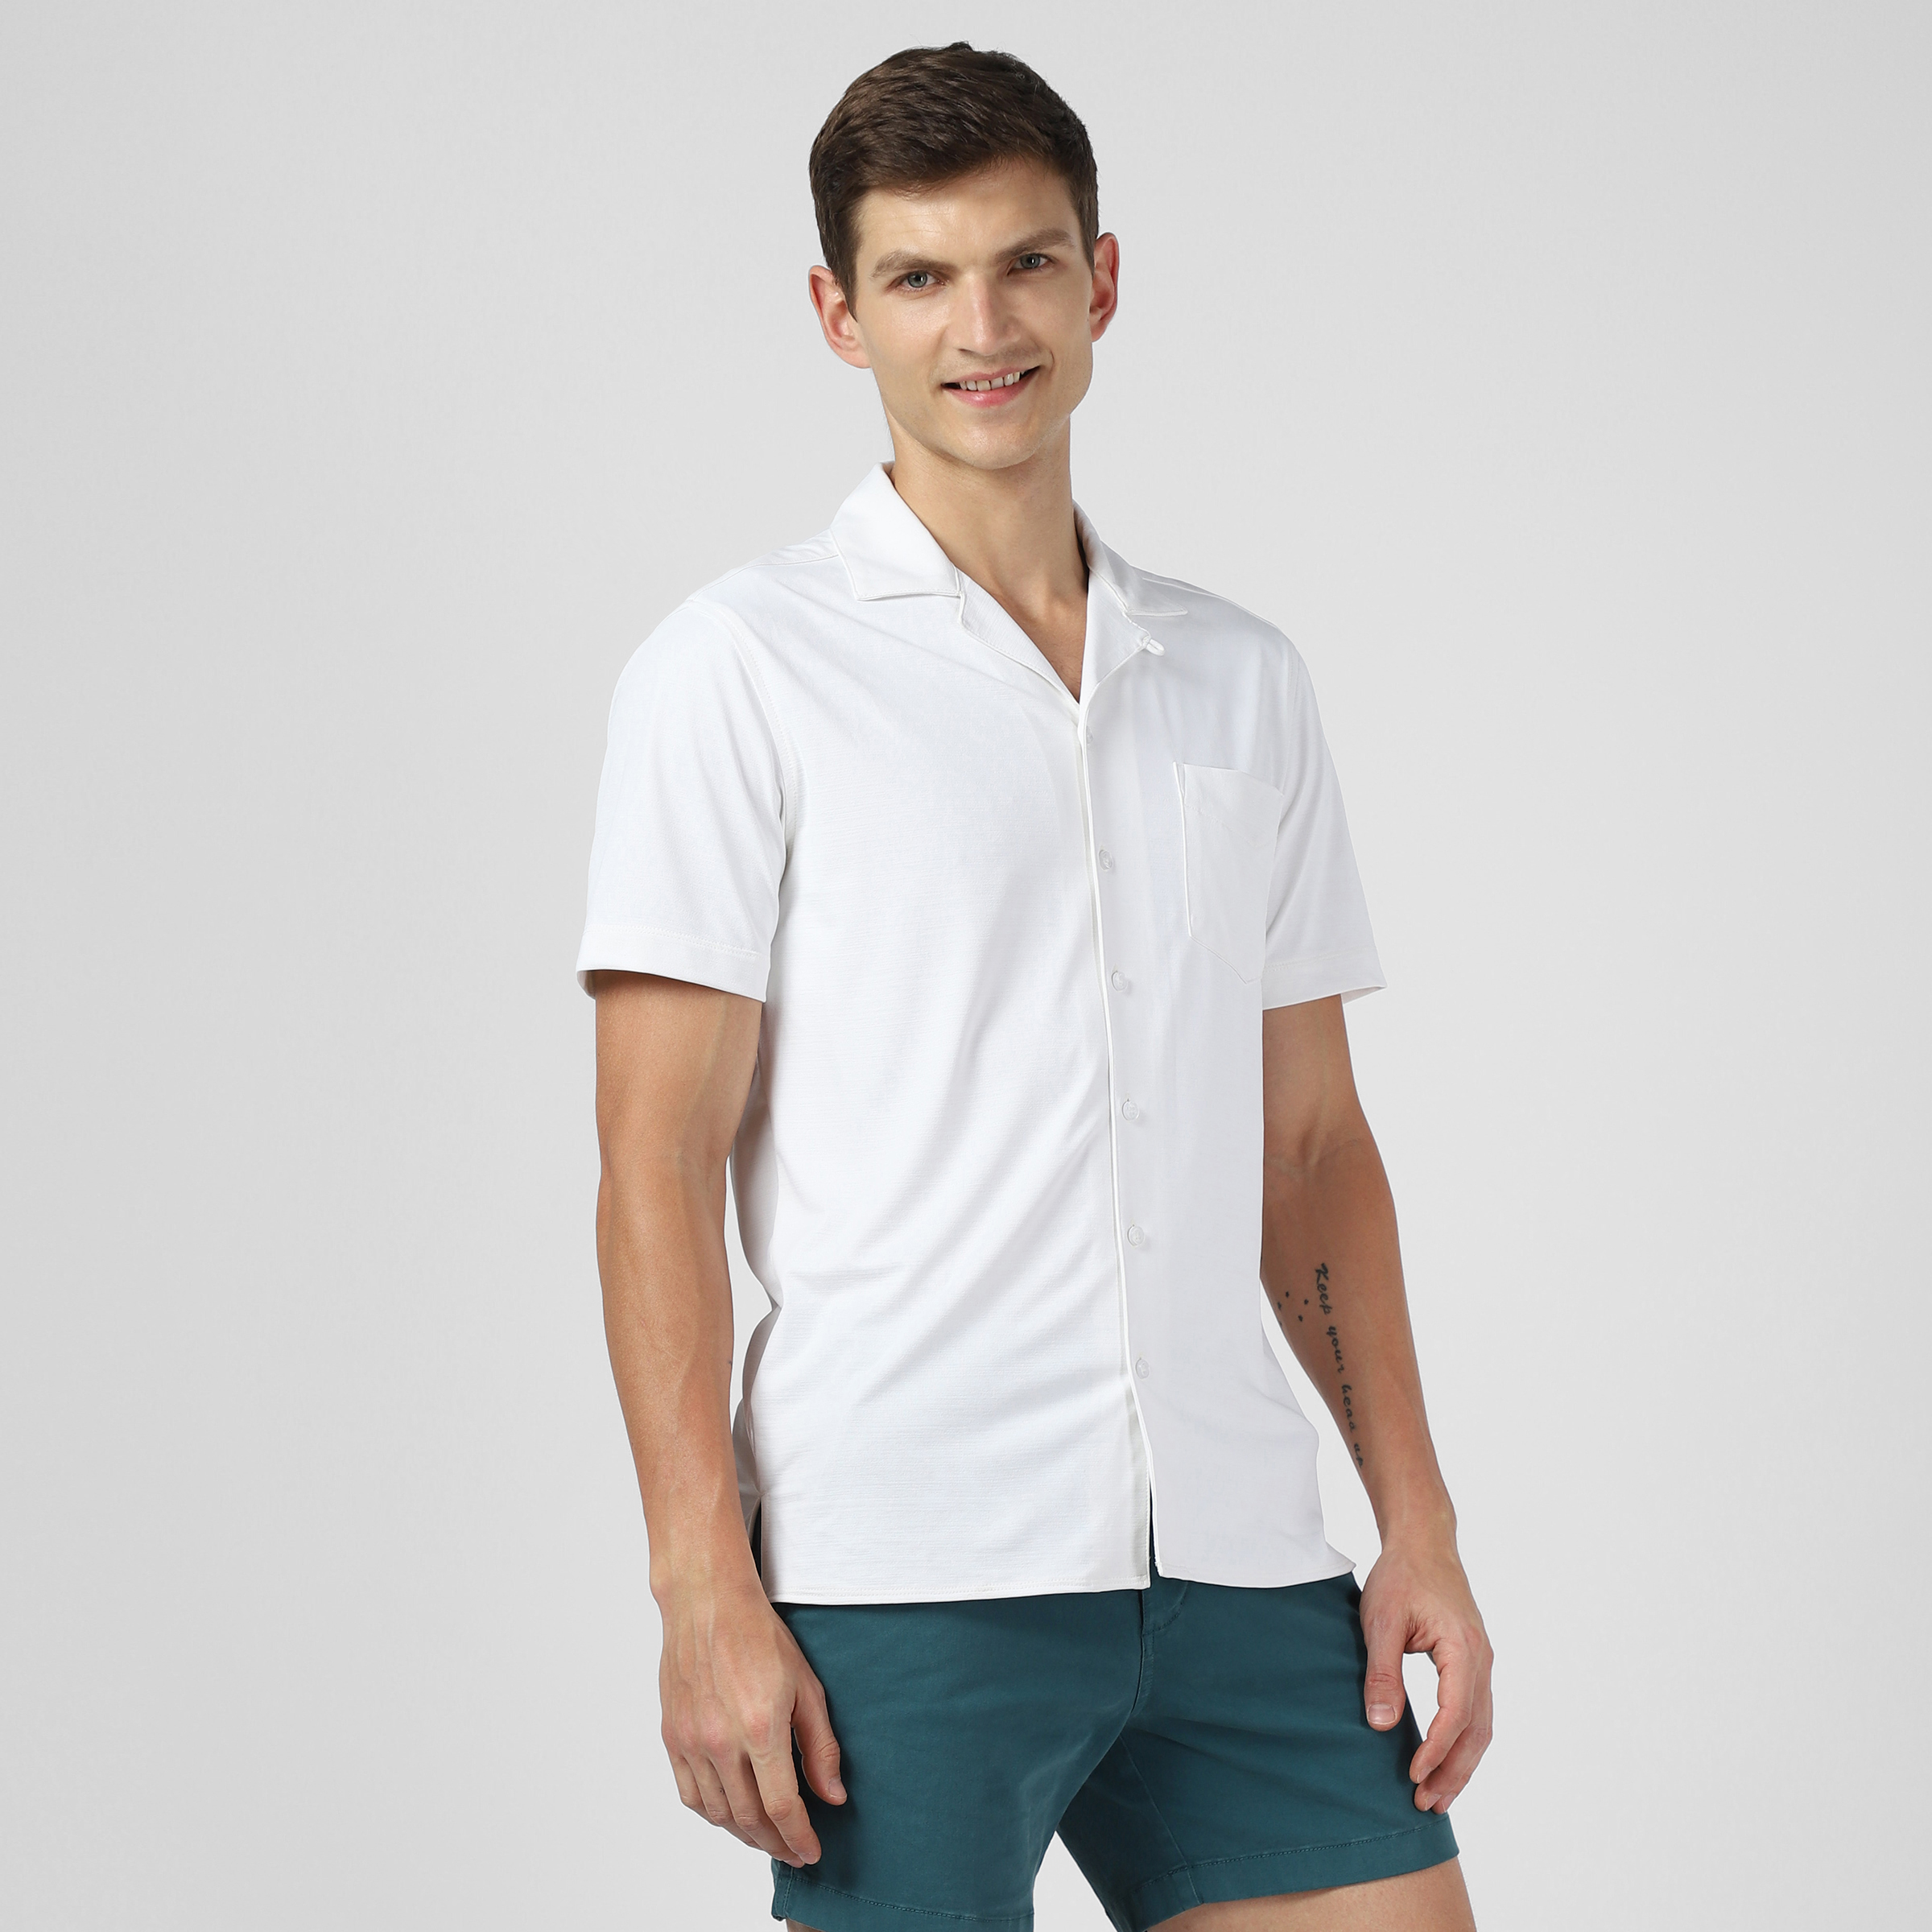 Villa Camp Collar Shirt White right side on model